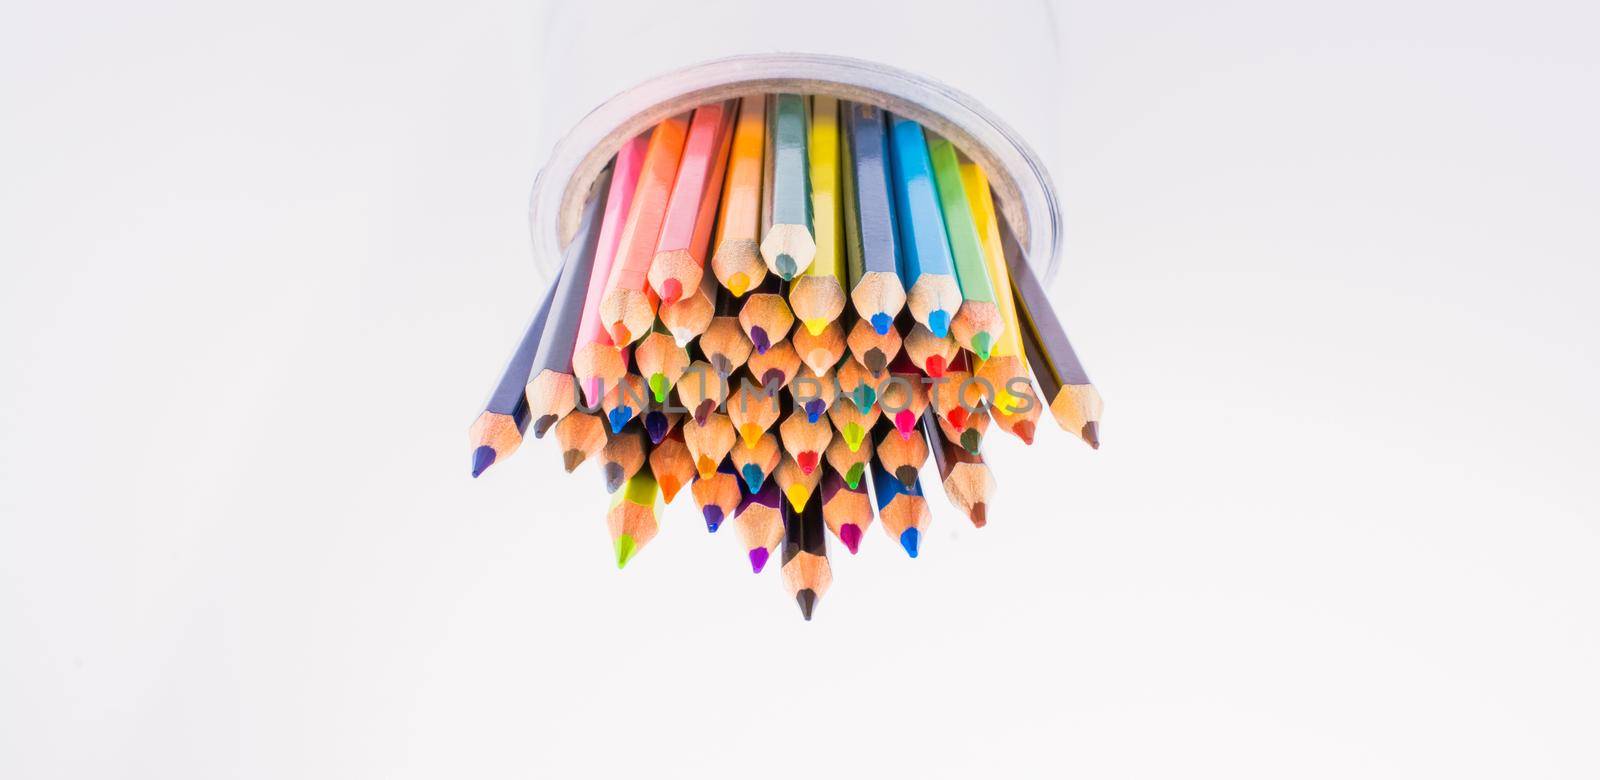 colorful pencils in a vase by berkay